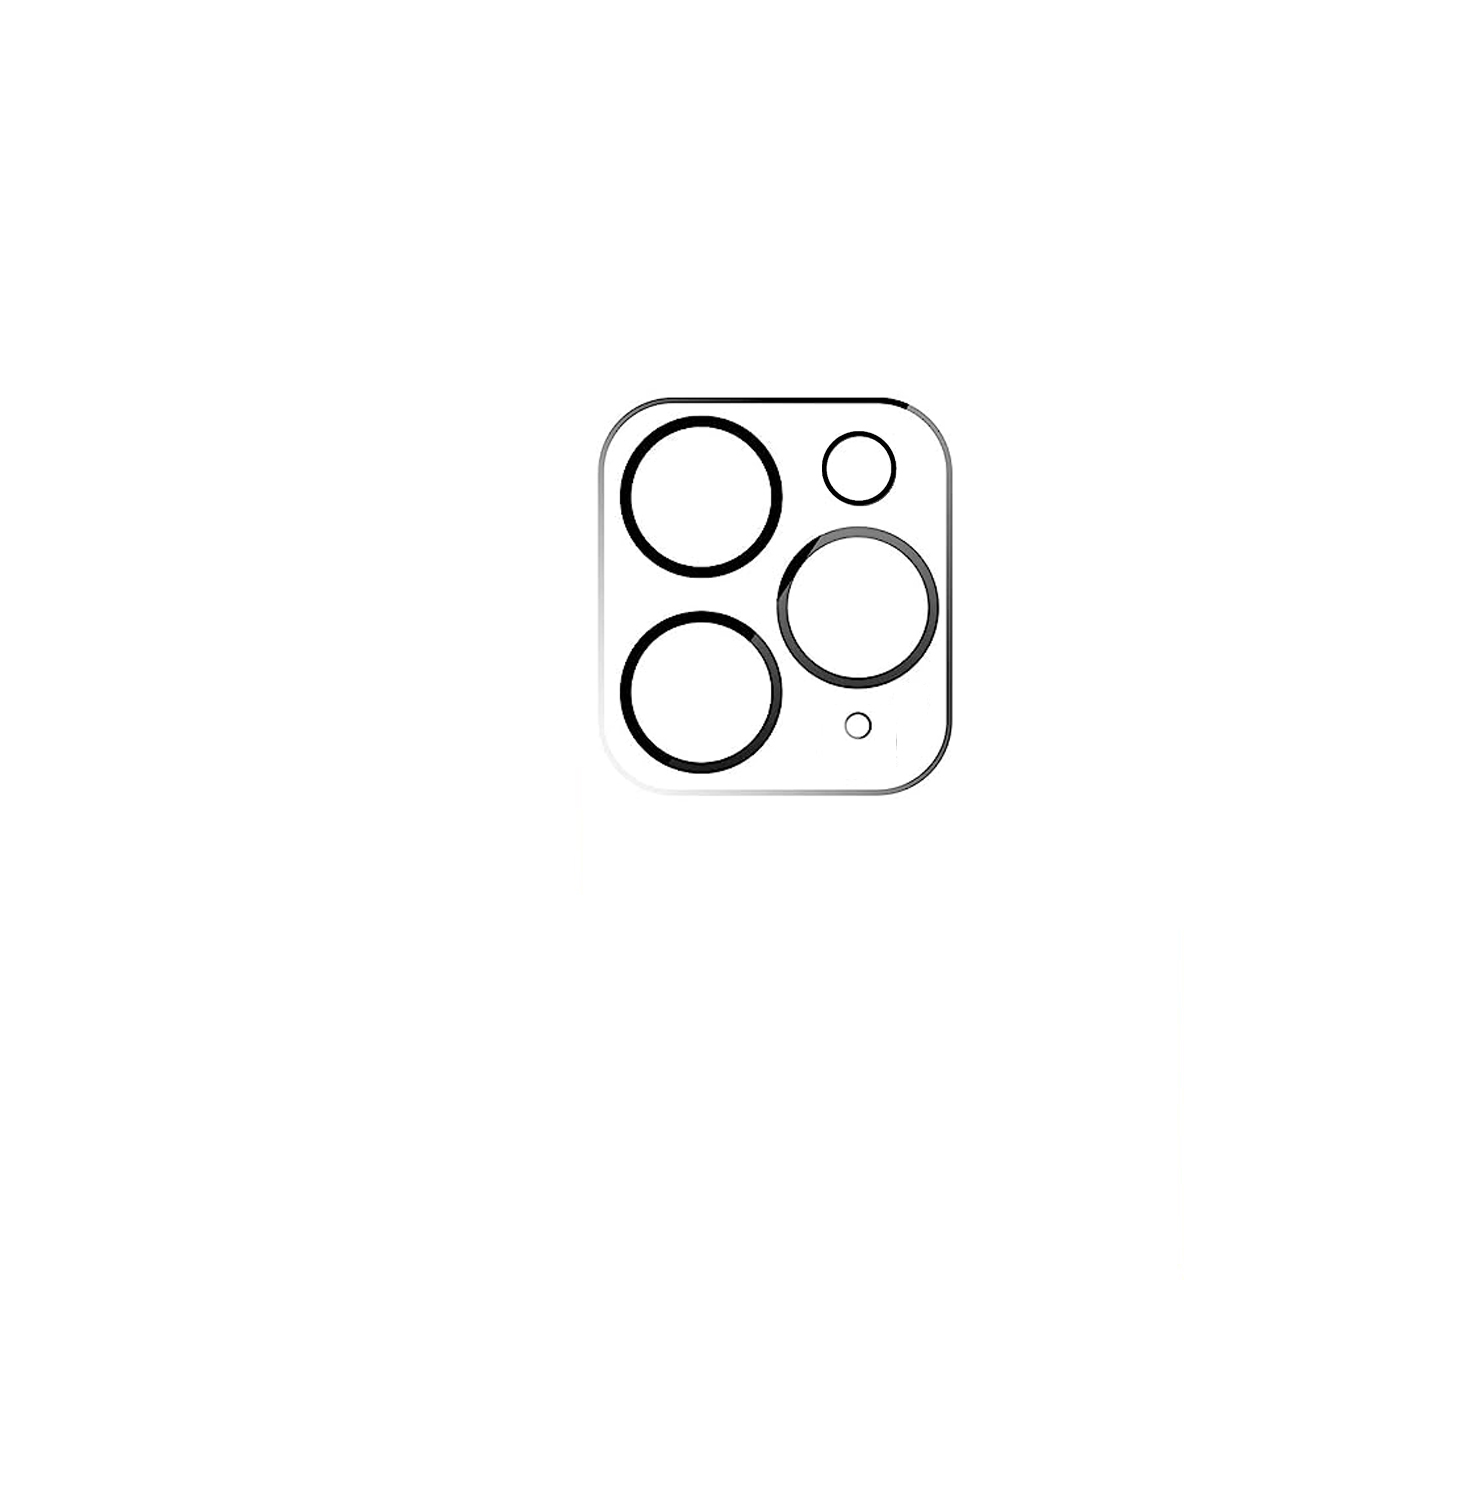 VENTARENT iPhone 11 Kameraschutz(für Pro, 11 iPhone iPhone Pro Max) Camera iPhone Apple